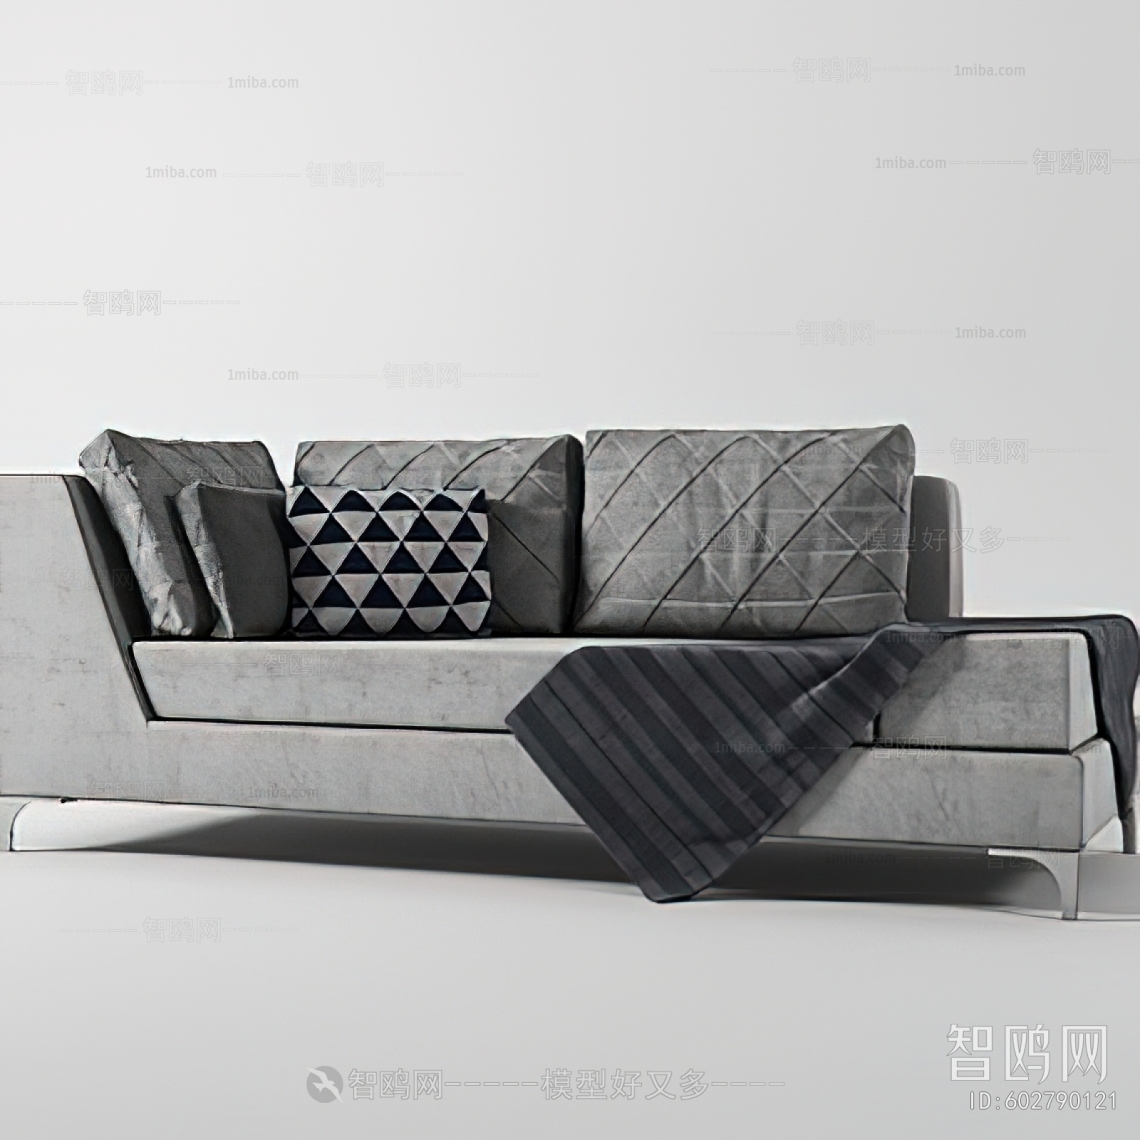 Modern Noble Concubine Chair